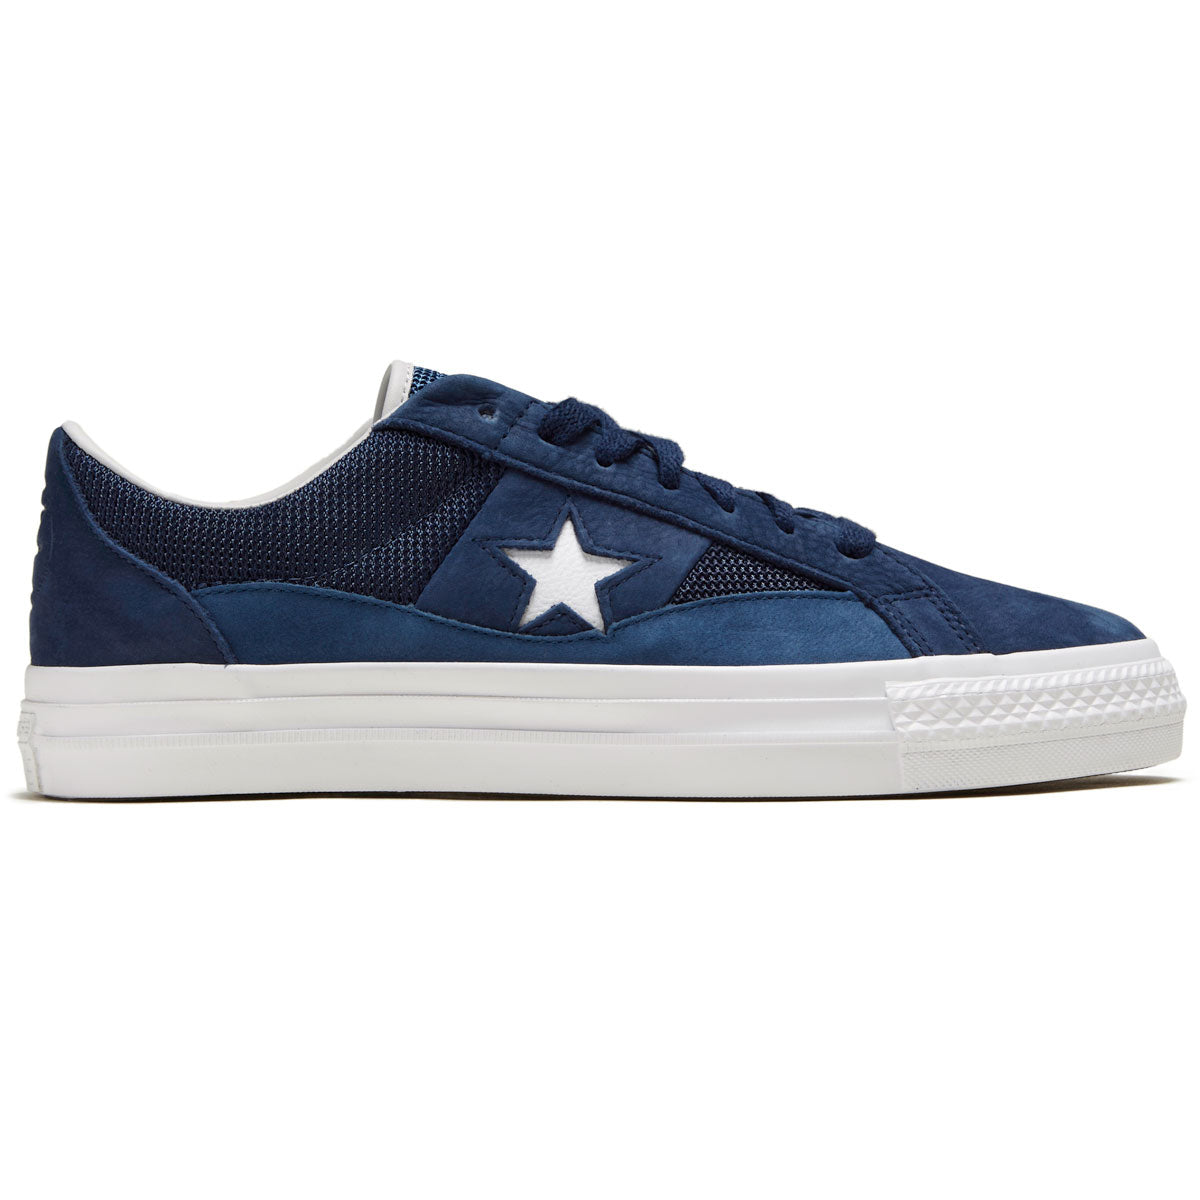 Converse x Alltimers Star Shoes - Midnight Navy/Navy CCS